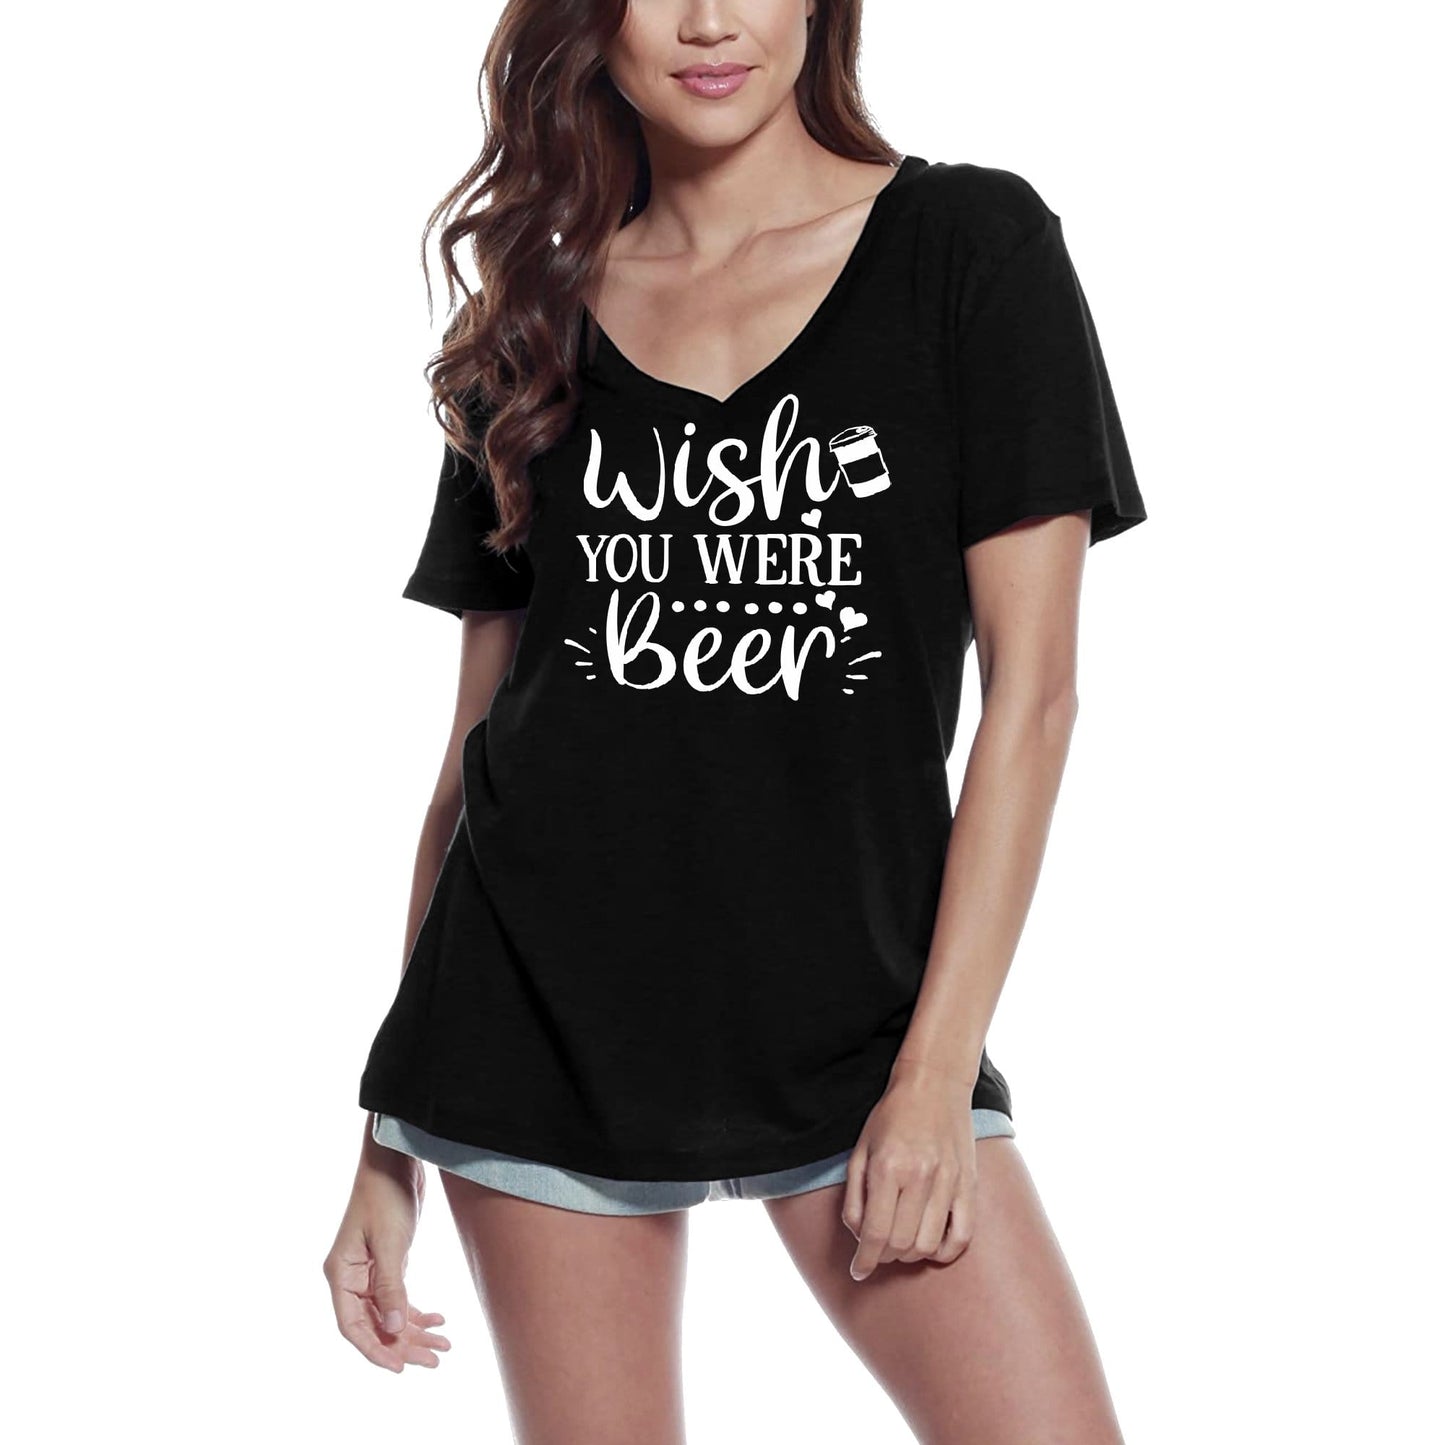 ULTRABASIC Women's T-Shirt Wish You Were Beer - Funny Short Sleeve Tee Shirt